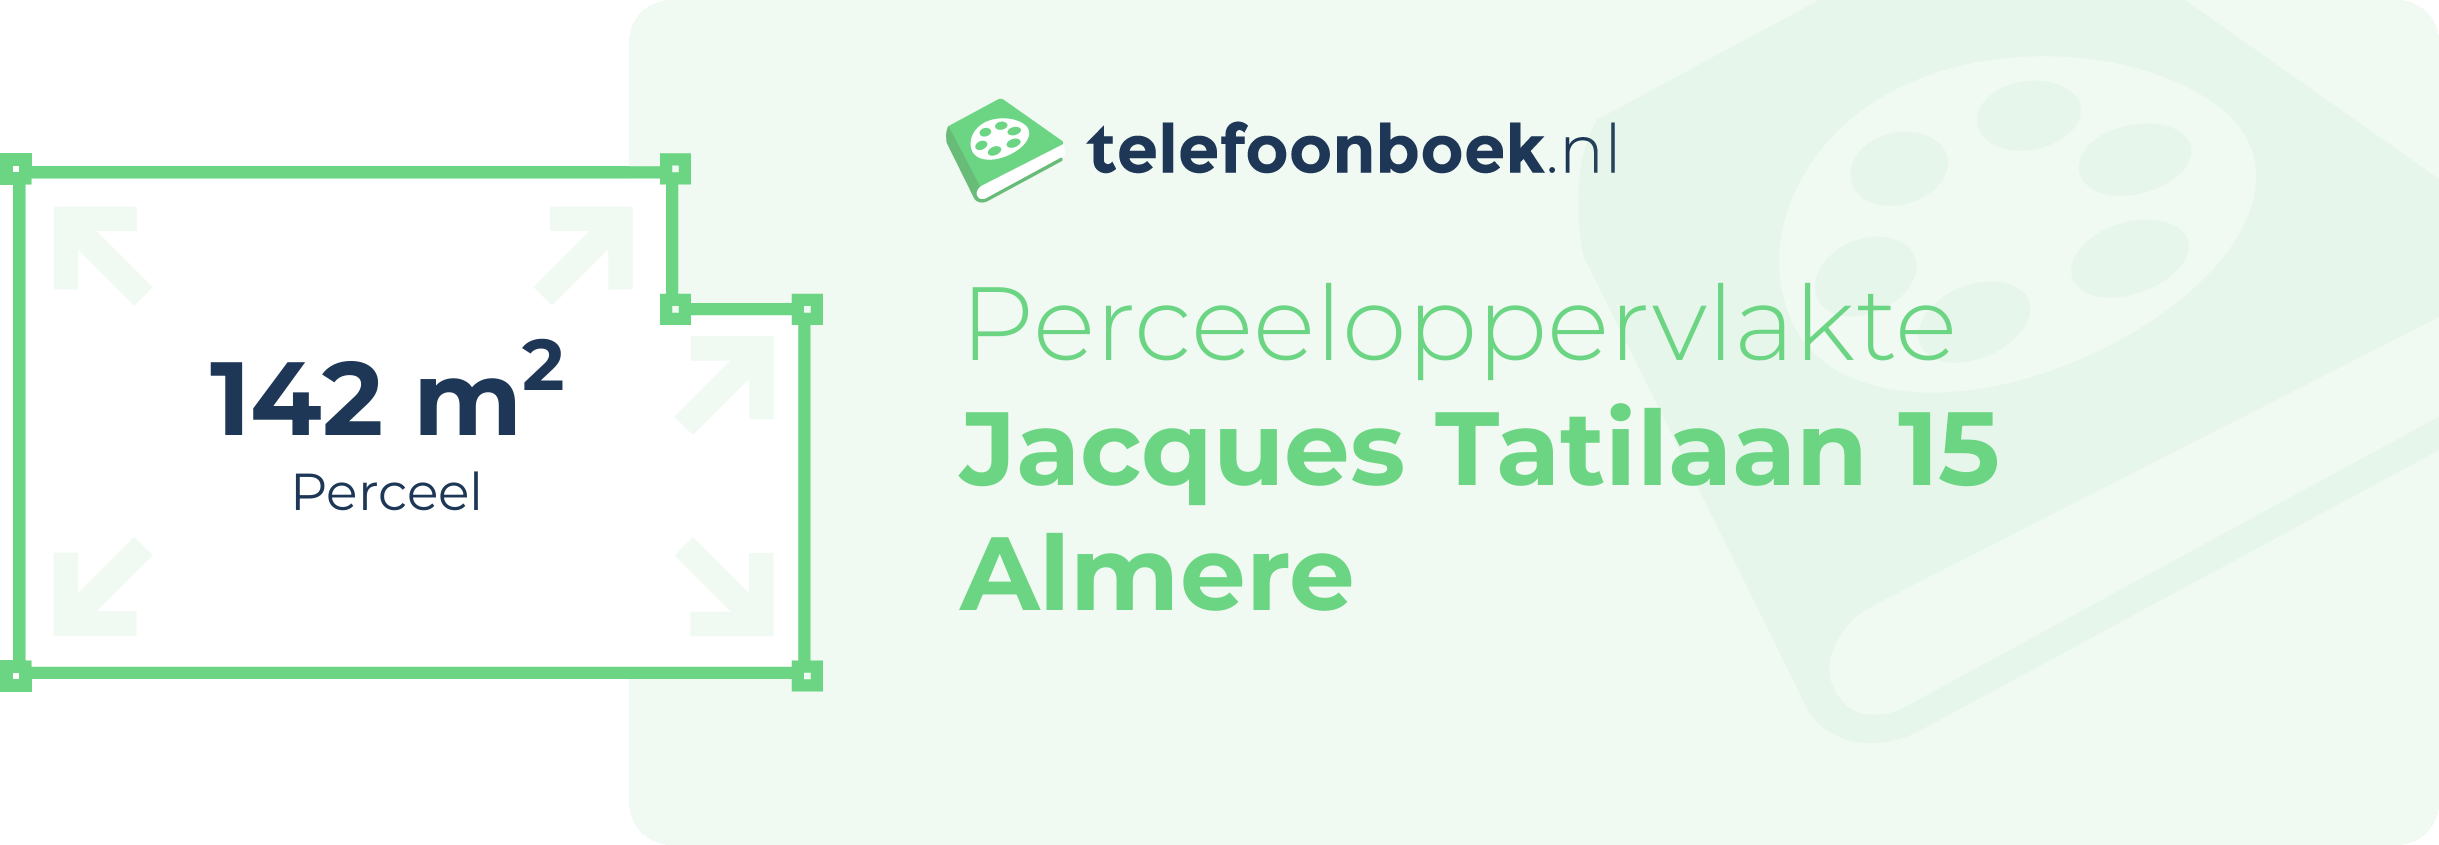 Perceeloppervlakte Jacques Tatilaan 15 Almere